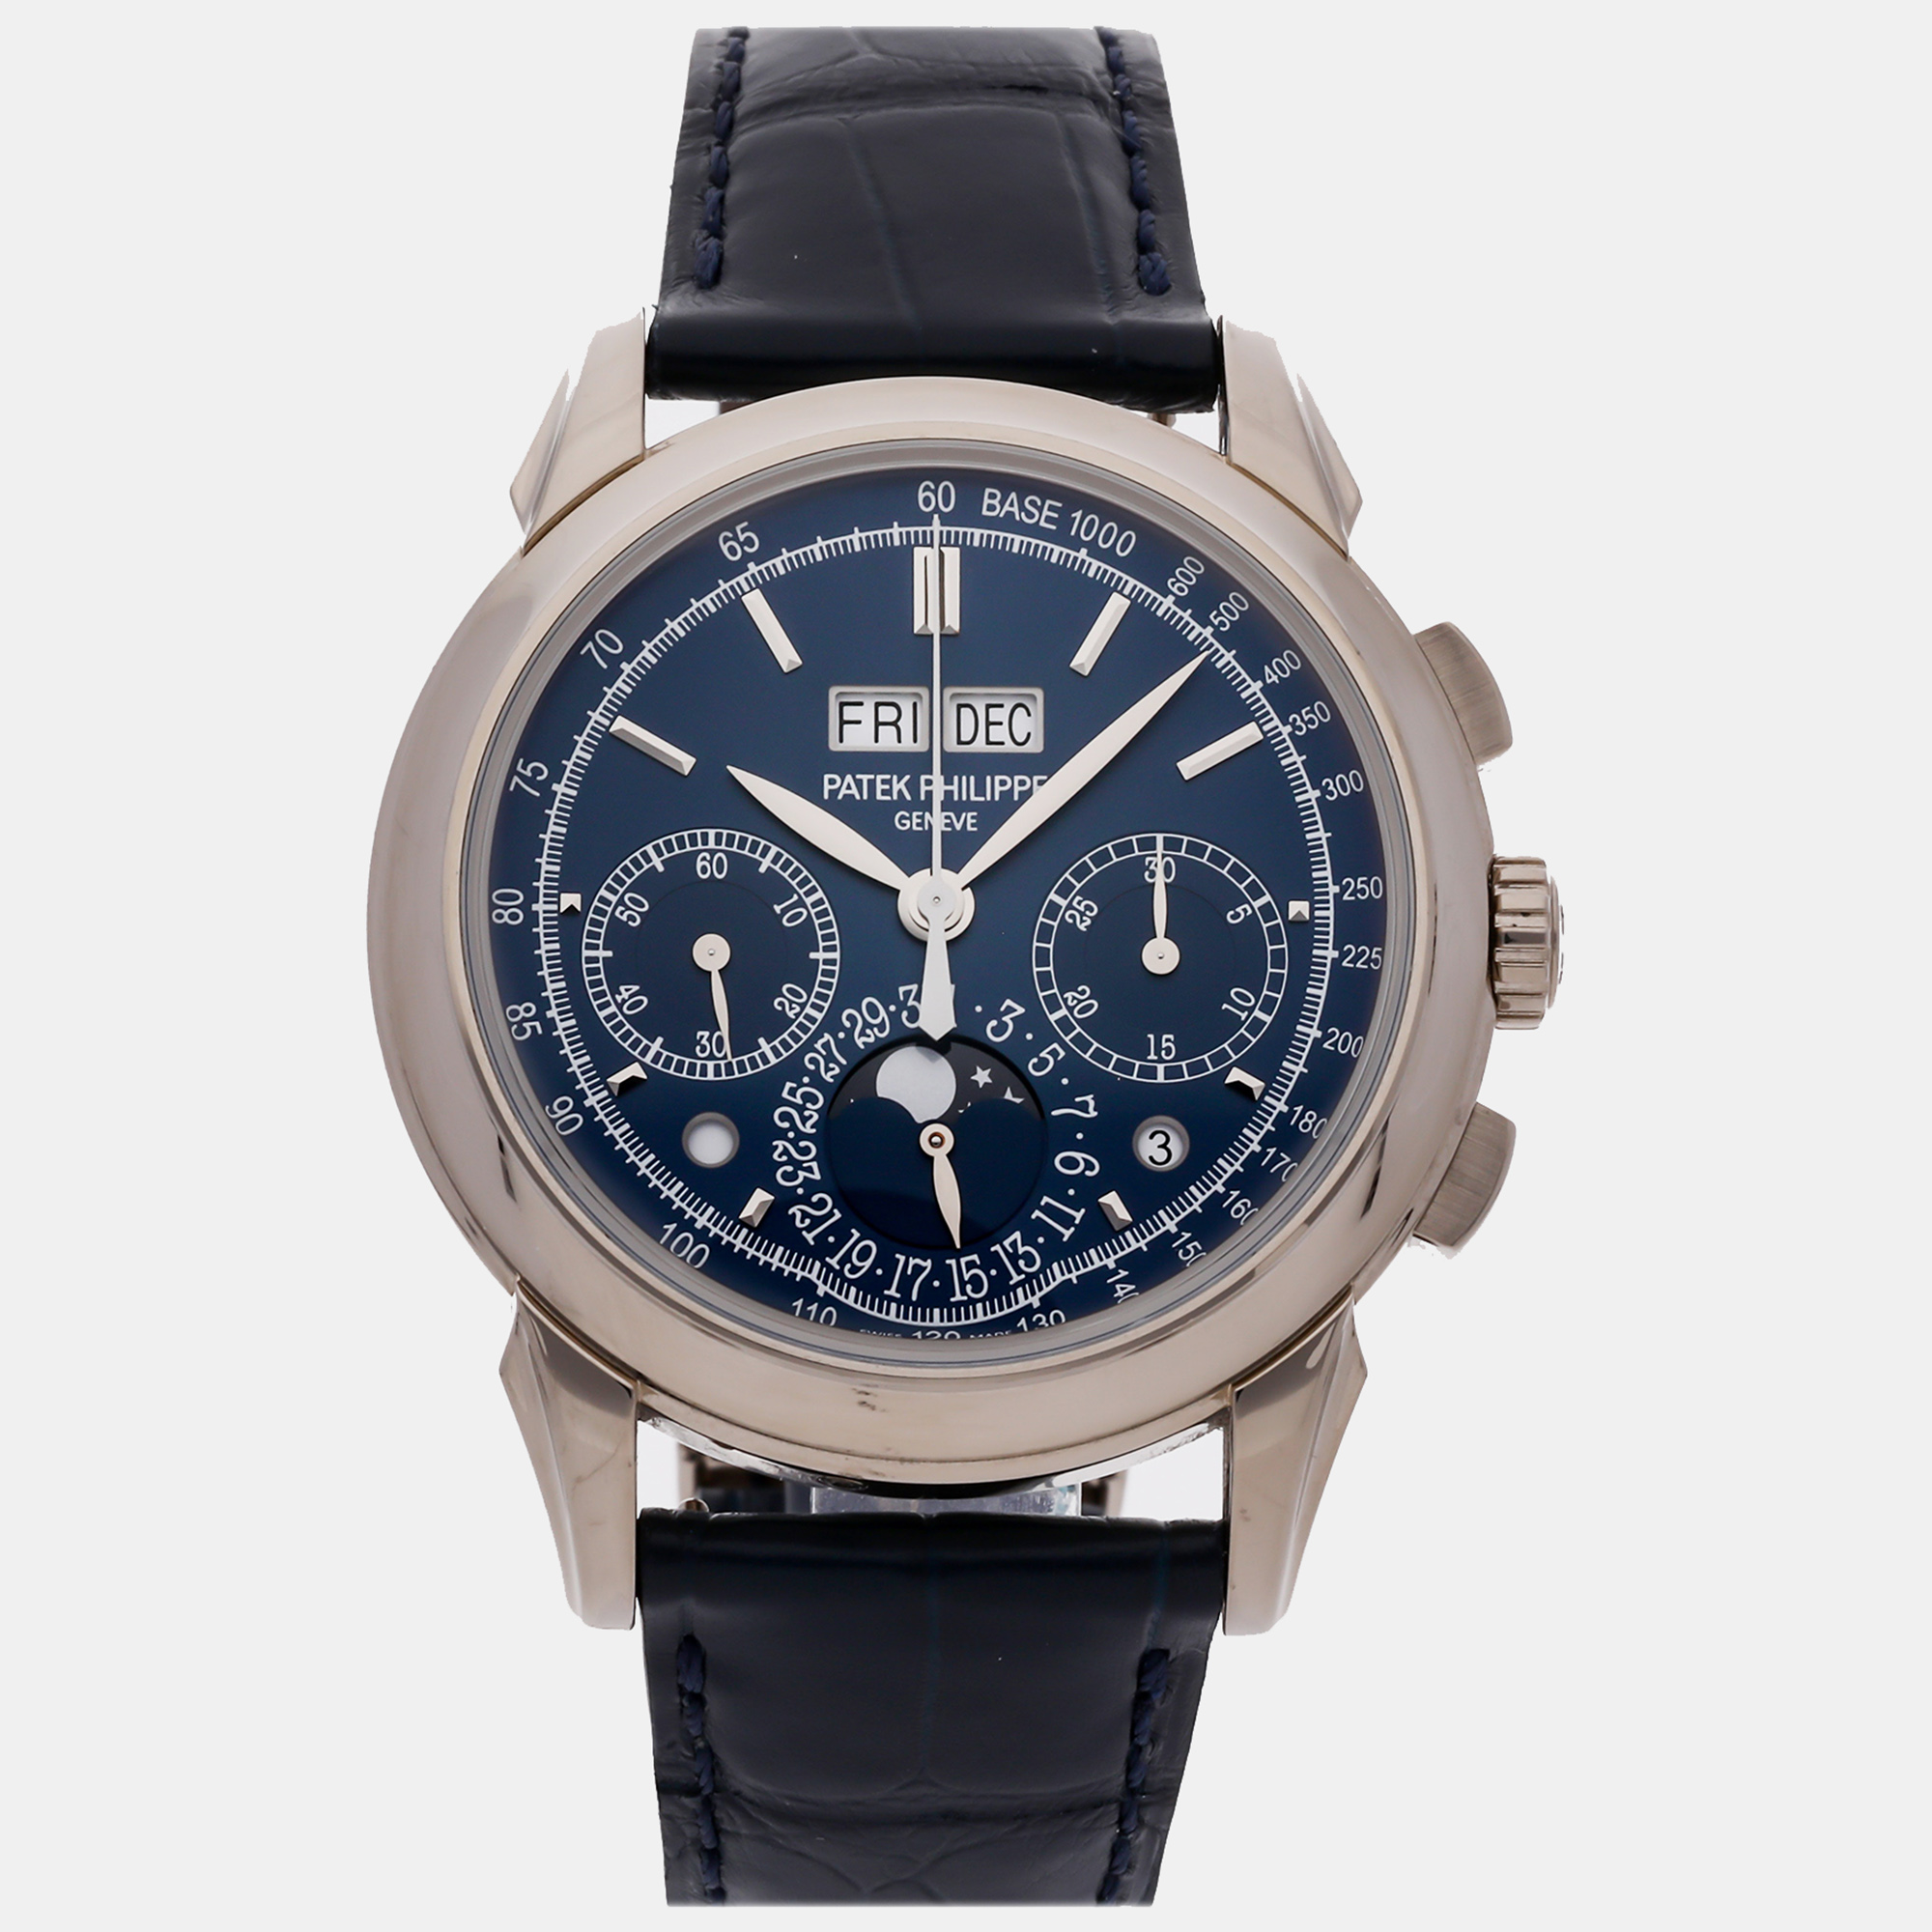 Patek philippe blue 18k white gold grand complications 5270g-014 manual wind men's wristwatch 41 mm